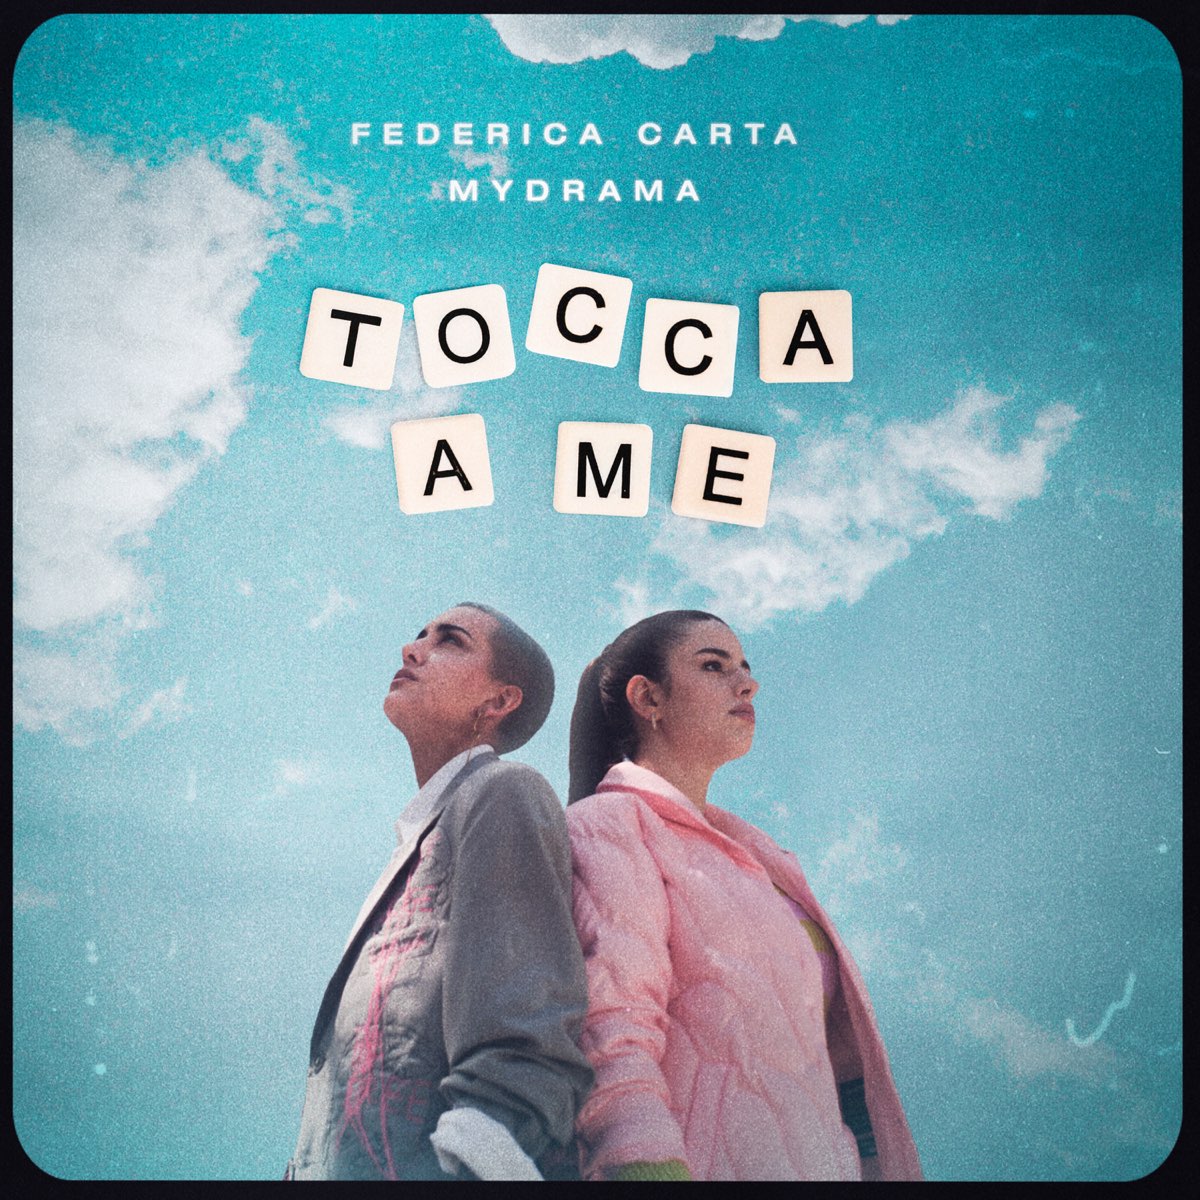 Tocca a me - Single by Federica Carta & MYDRAMA on Apple Music